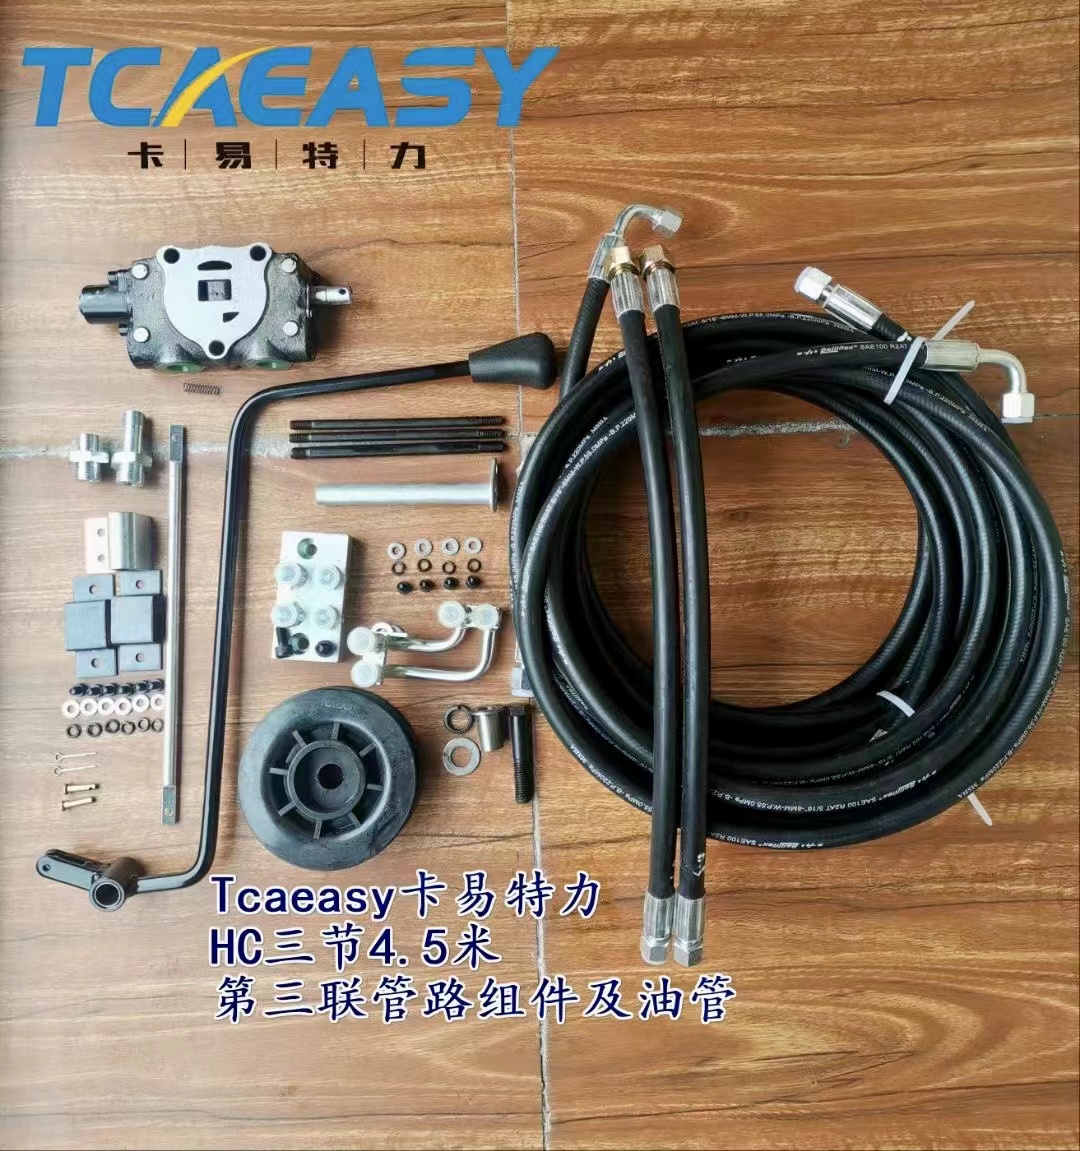 HANGZHOU Forklift Attachment Tubing HC1004